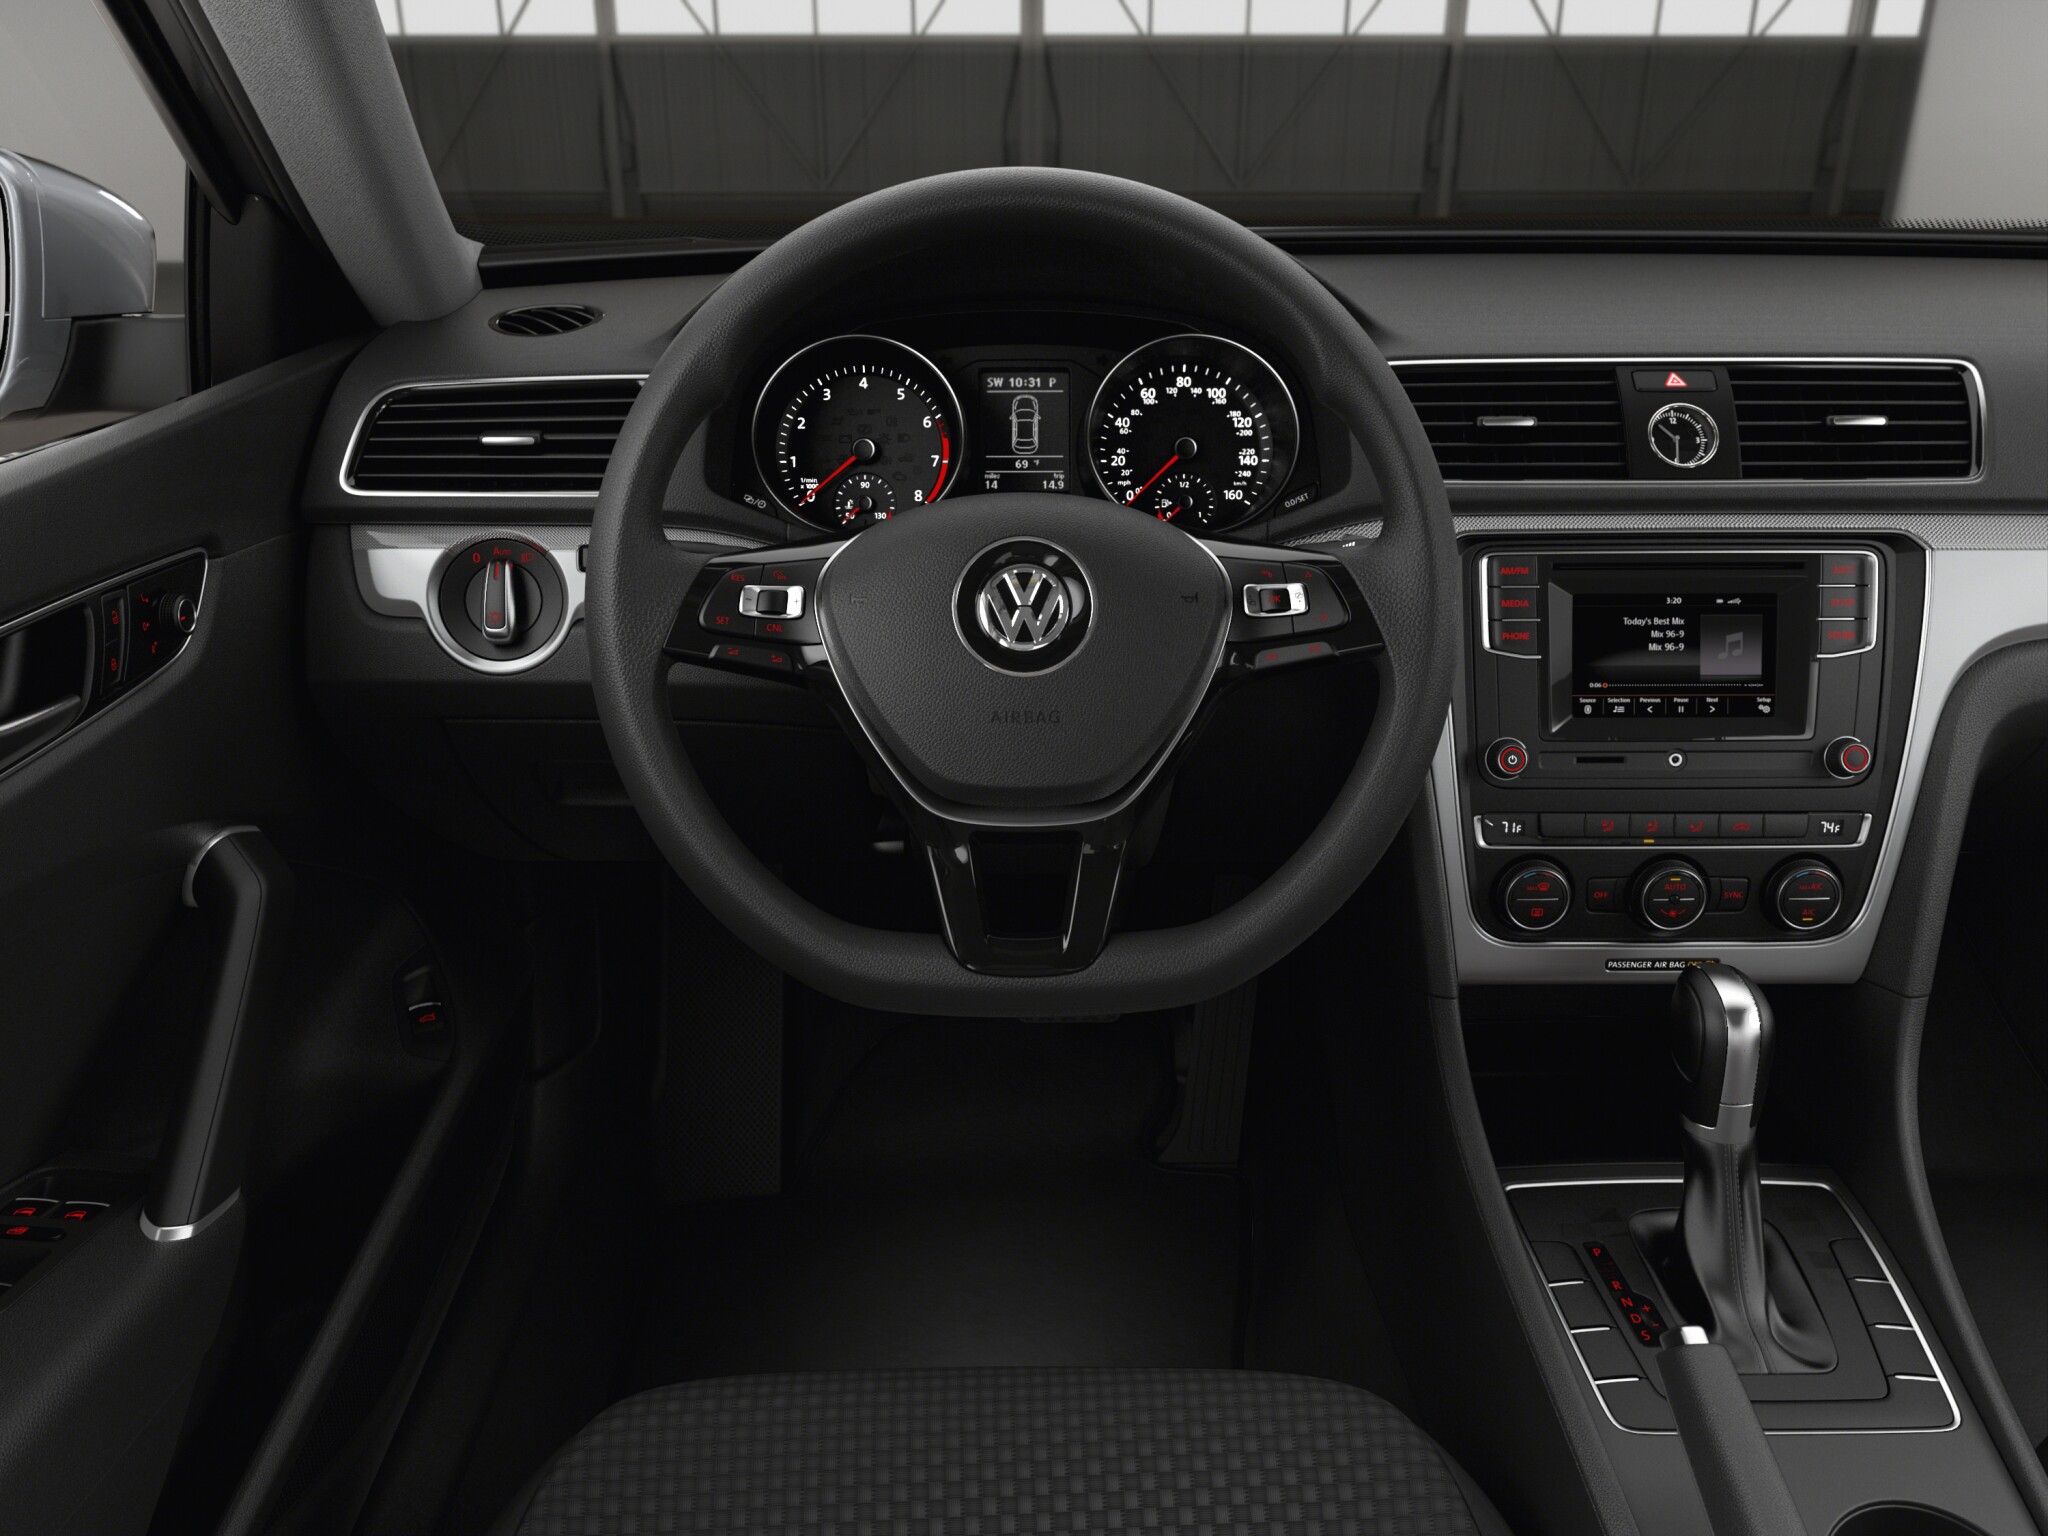 Volkswagen Passat 1.8T SE W/Technology front view